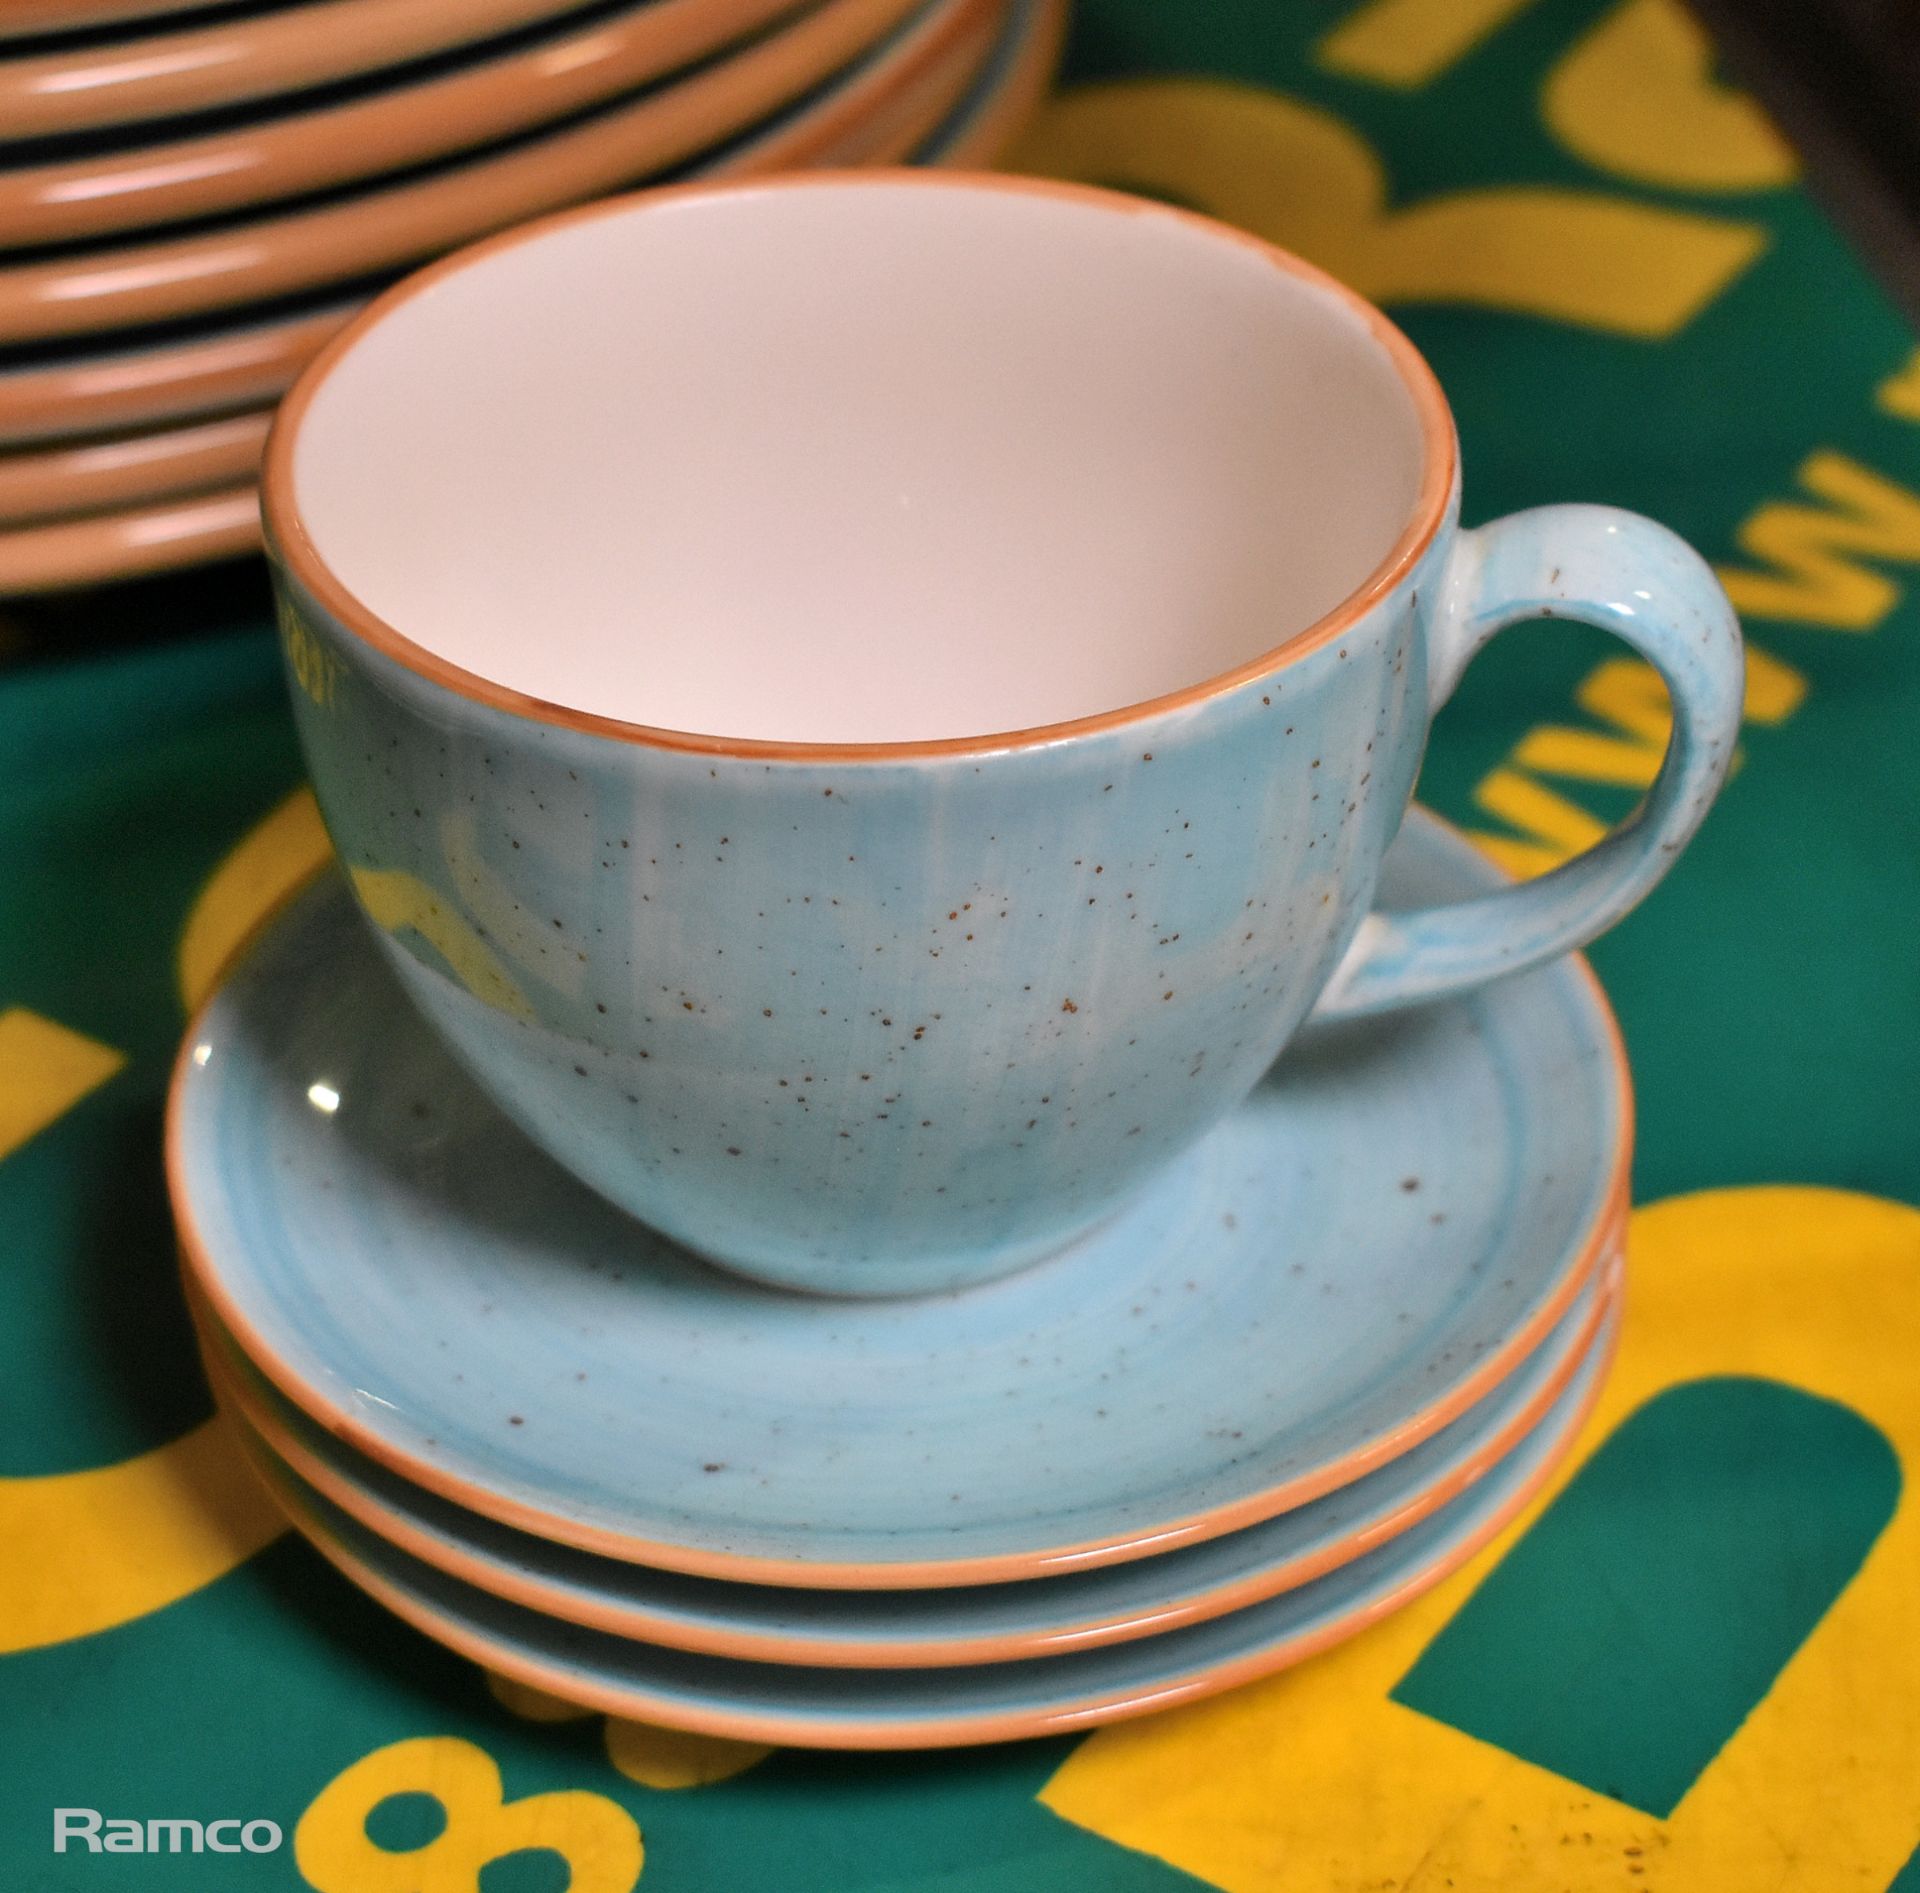 Bonna Premium Porcelain Aura Aqua crockery set: cups, saucers, plates and bowls - Image 3 of 4